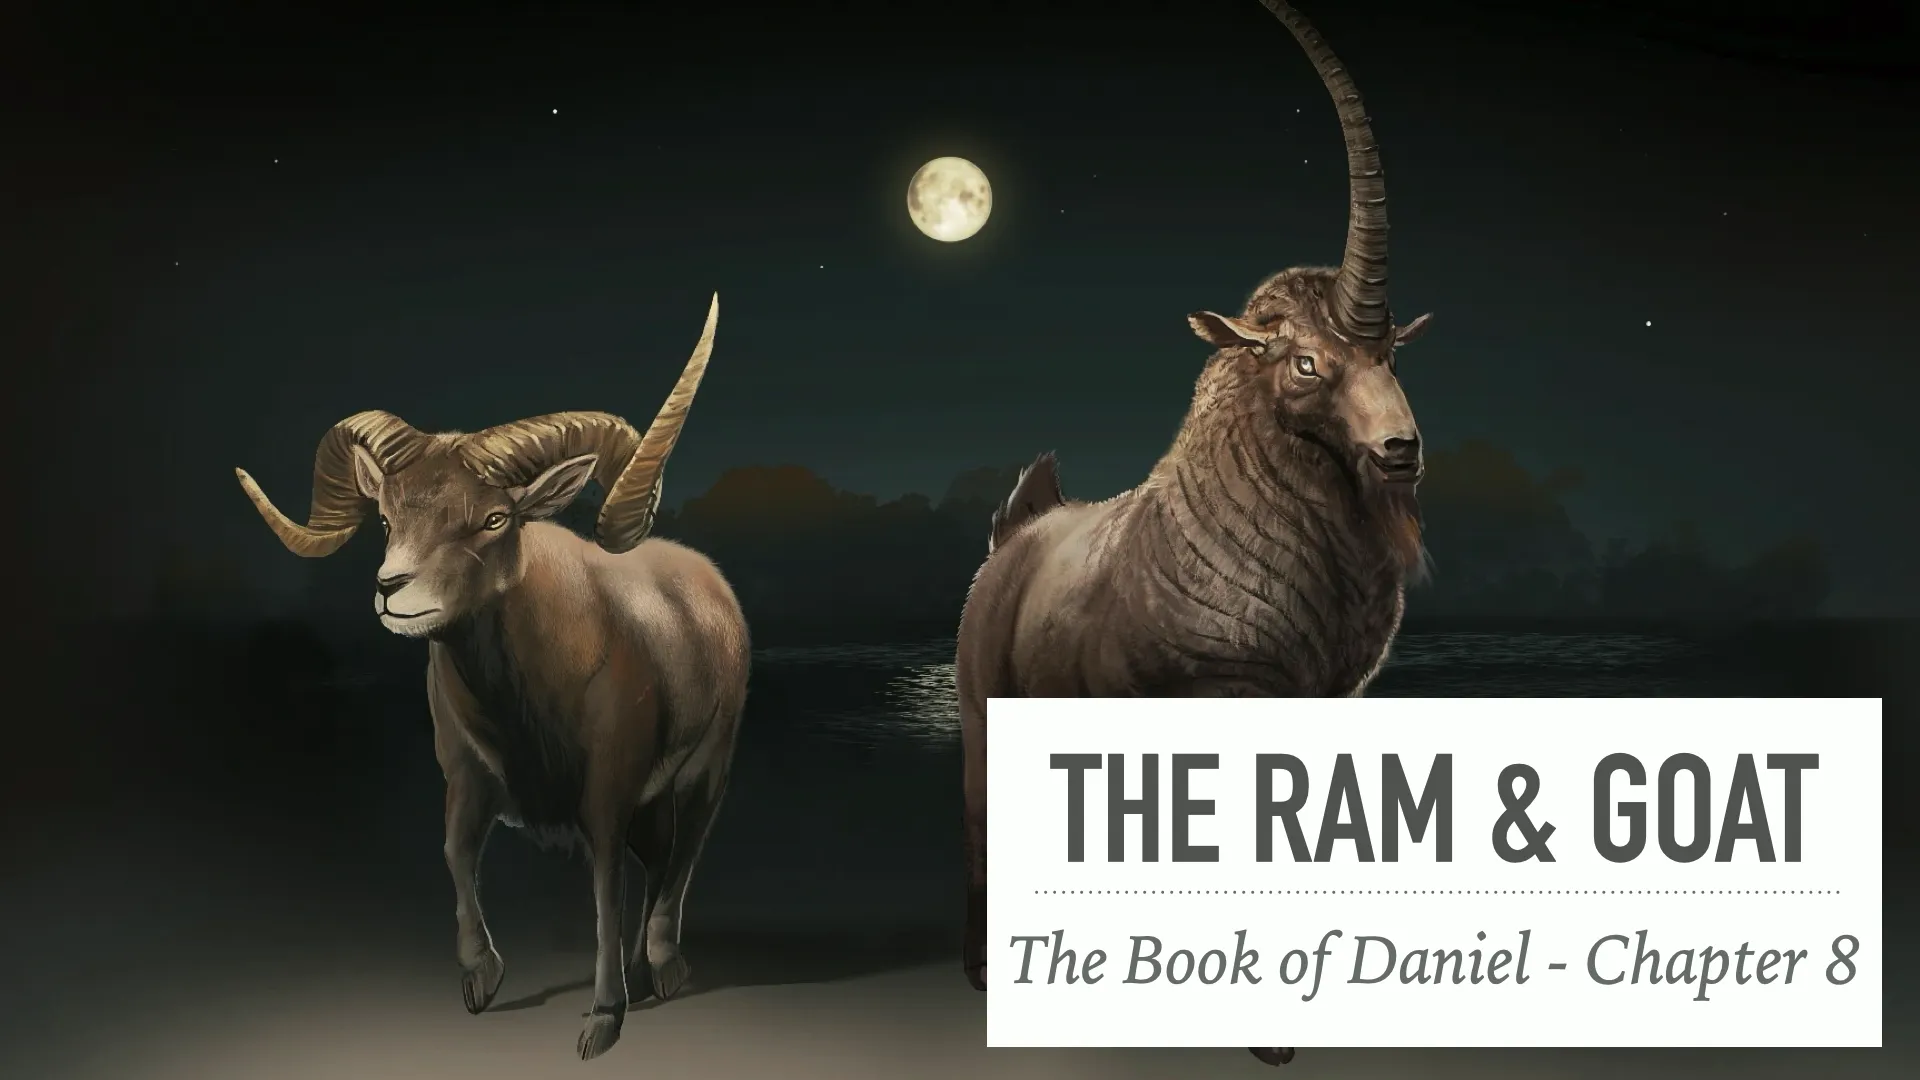 The Ram & Goat